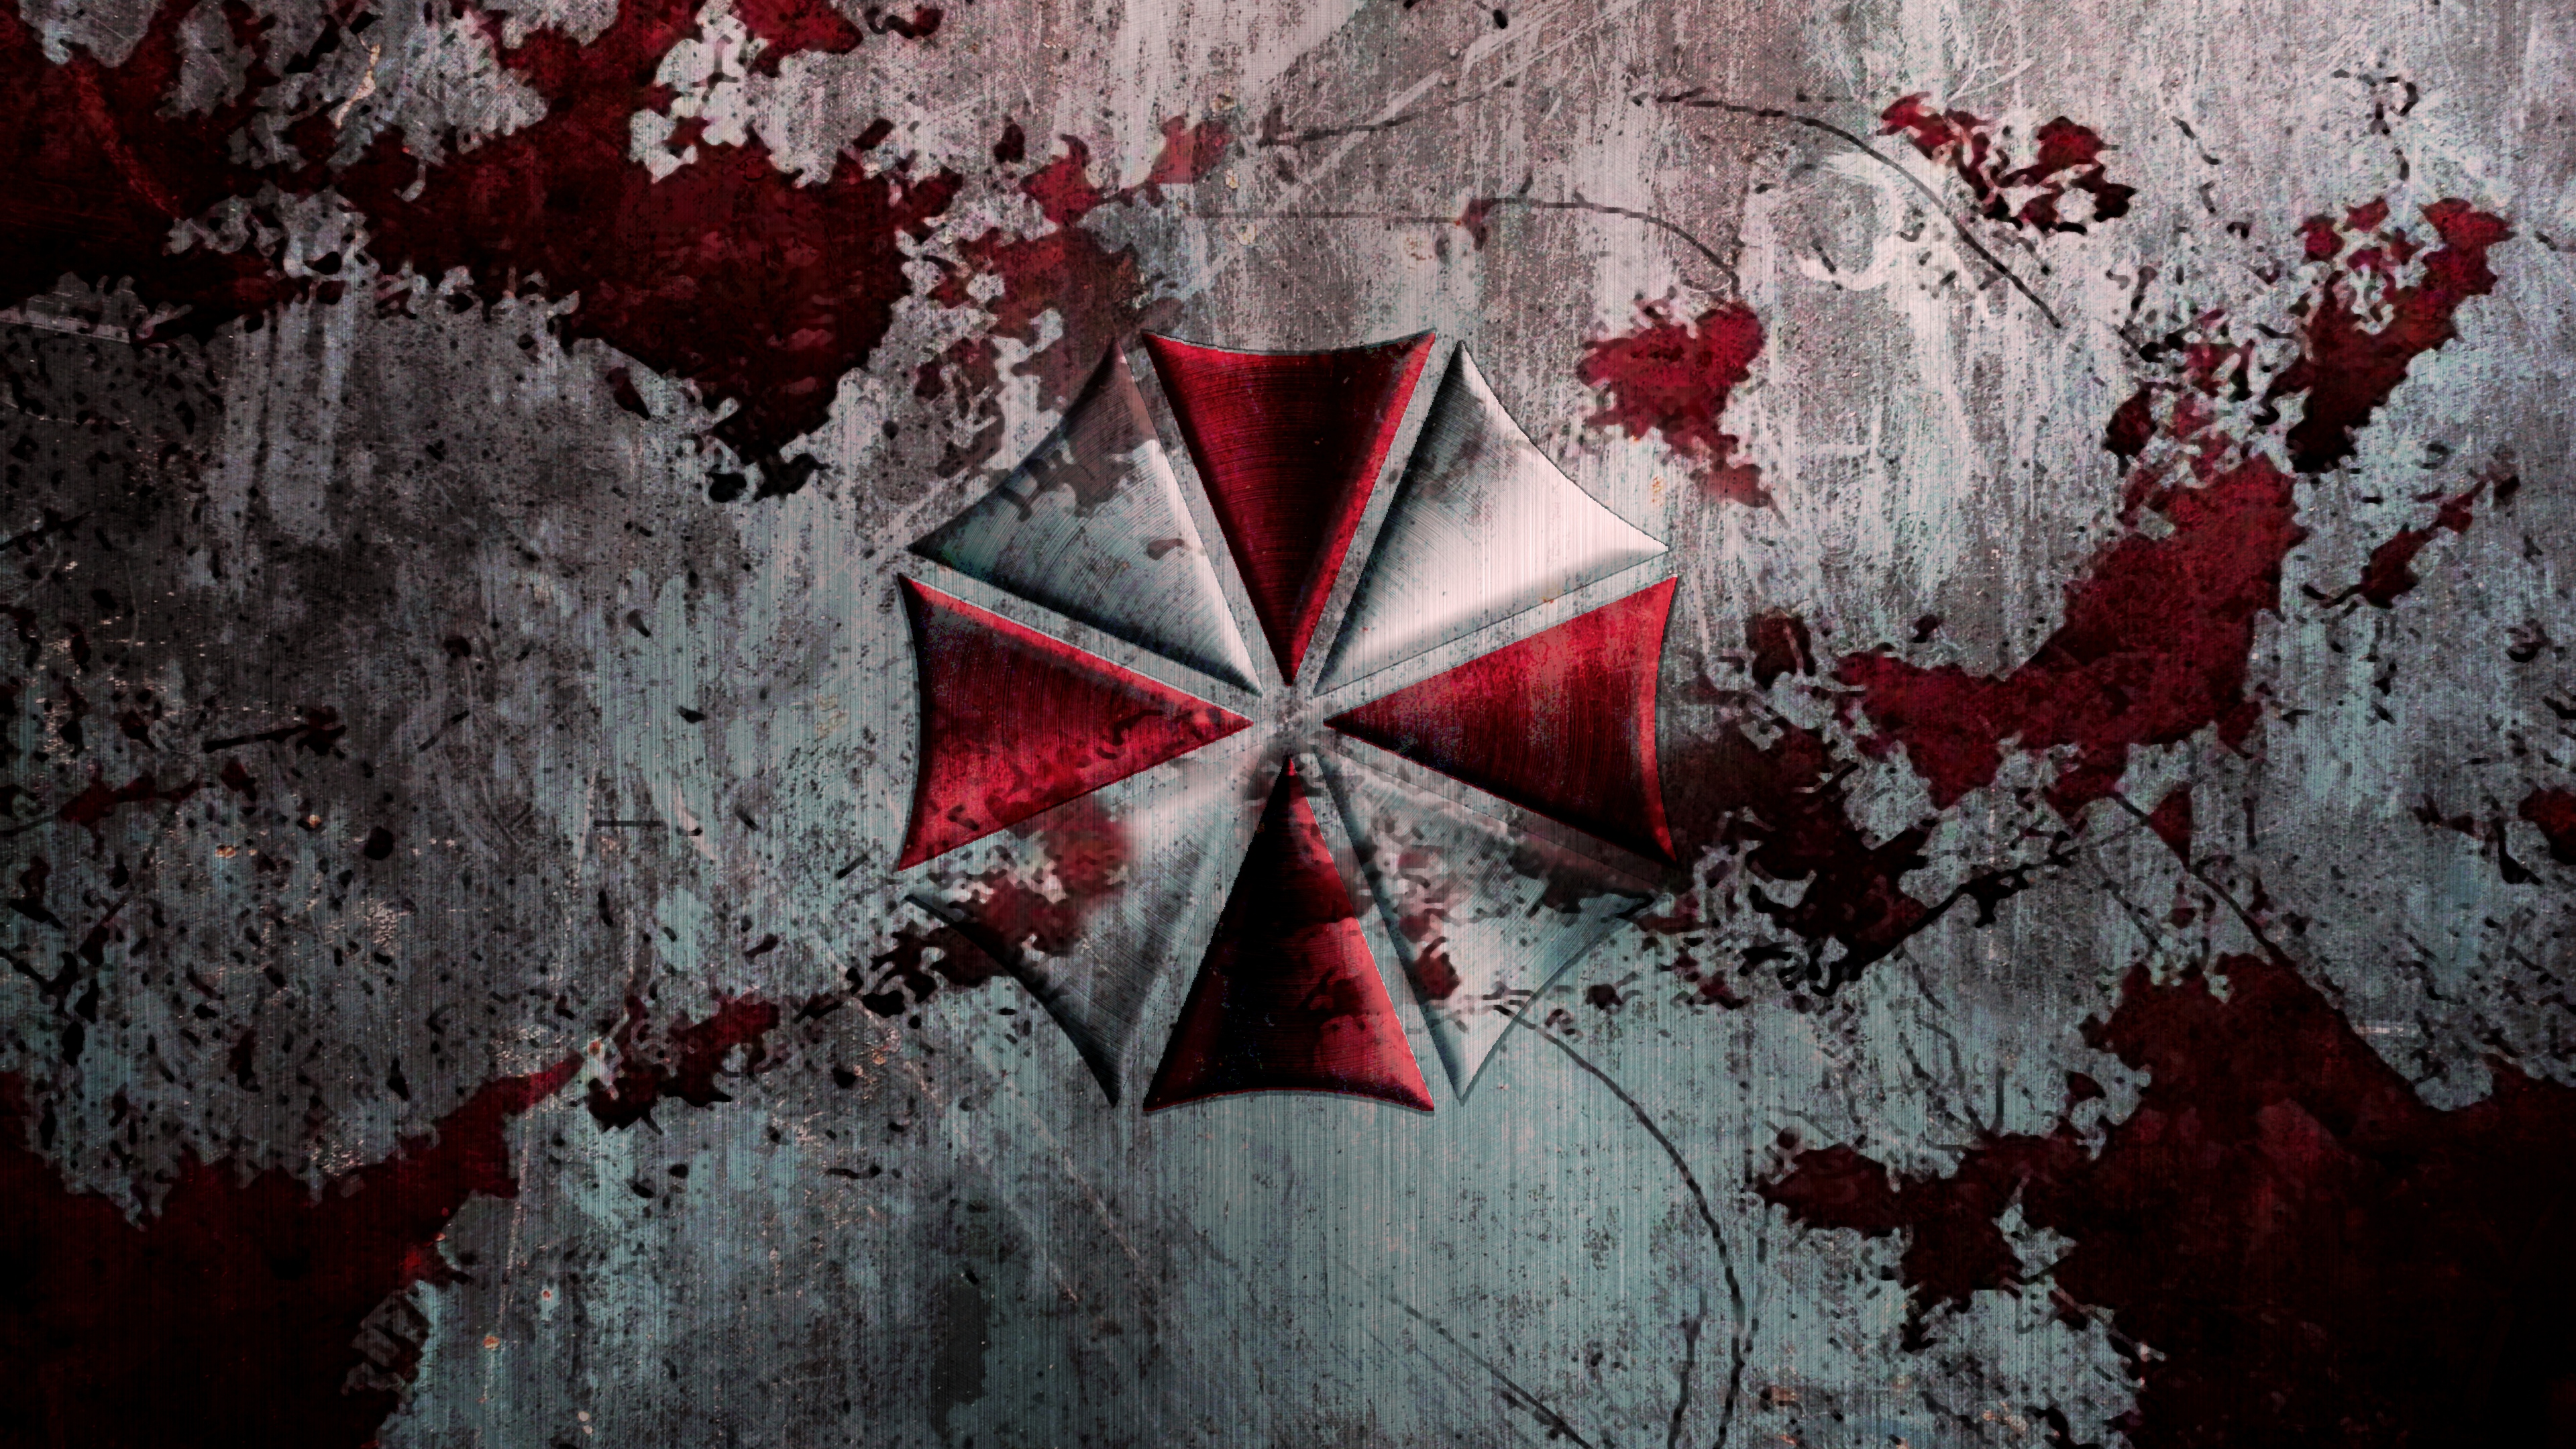  49 Resident  Evil  Wallpapers  HD  on WallpaperSafari